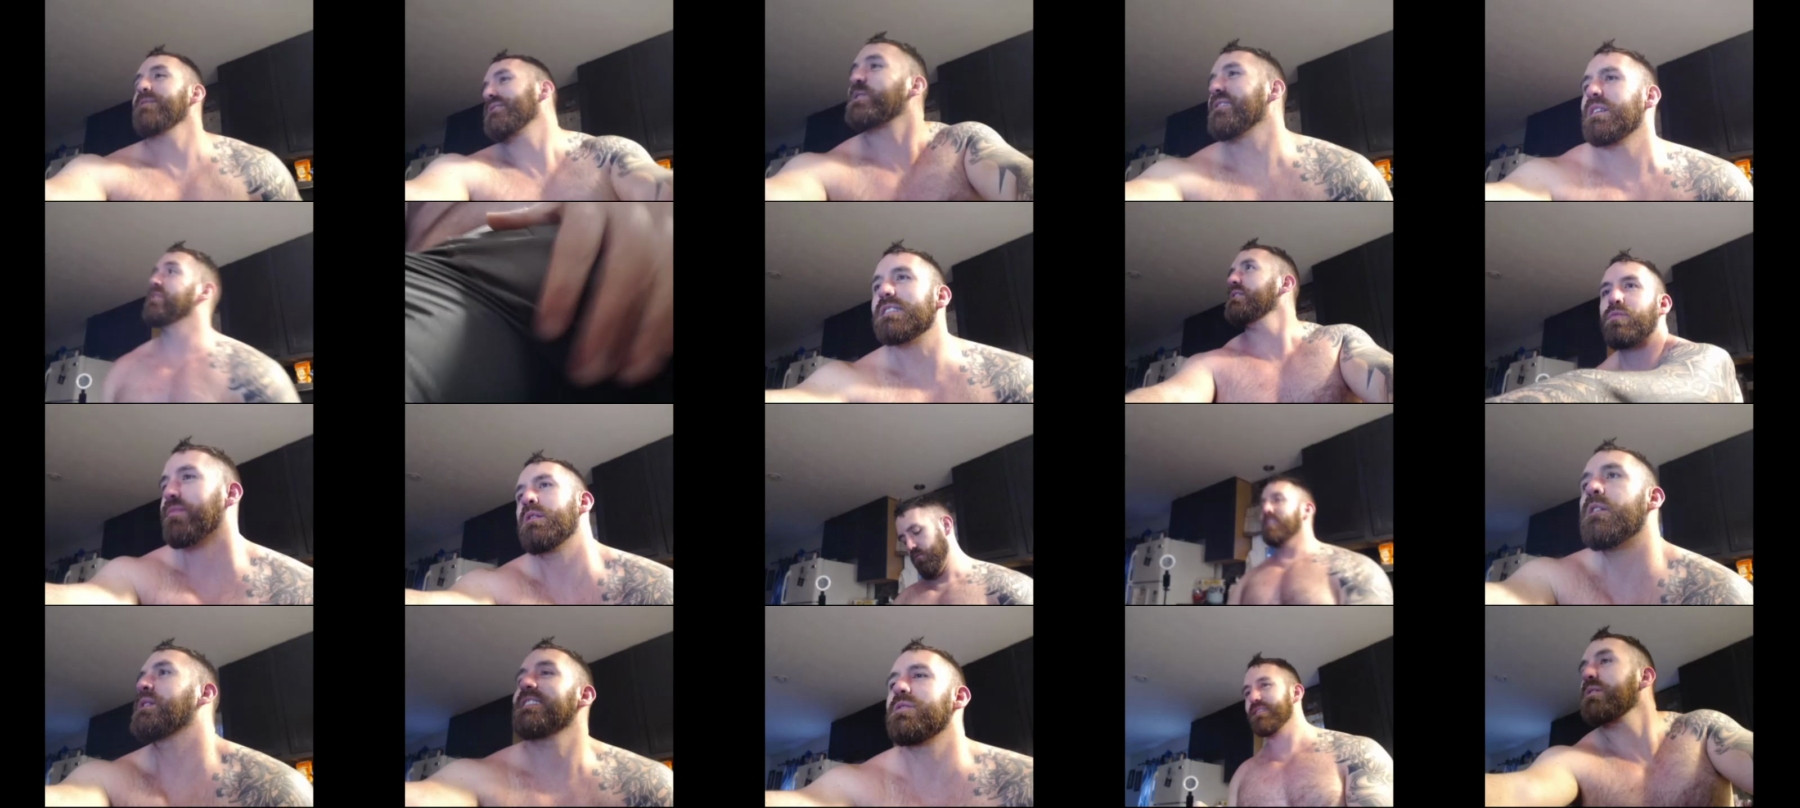 Seth_2019  13-05-2021 Male Topless